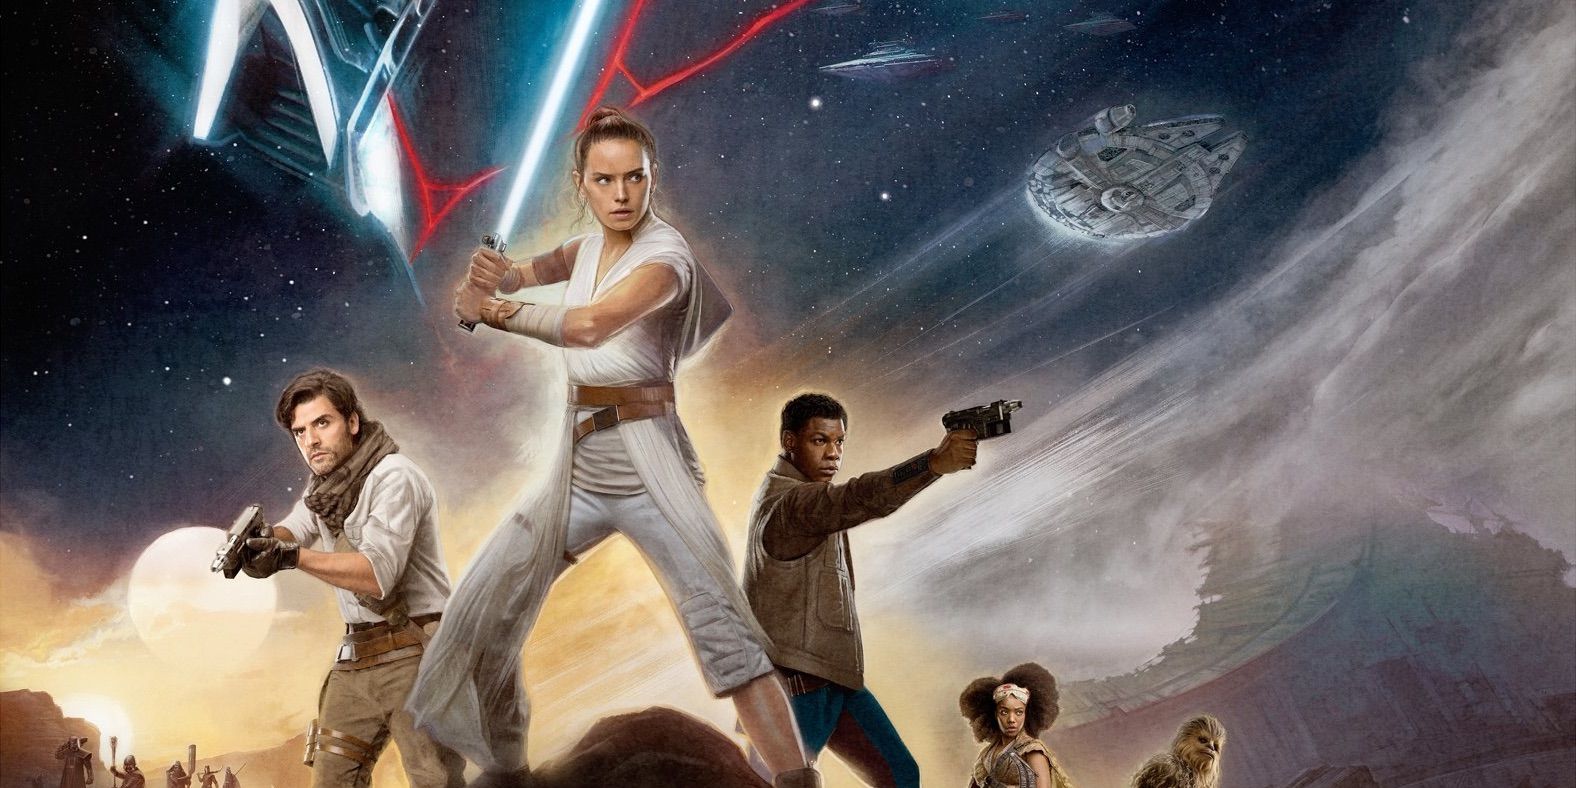 Star Wars: Episode IX - The Rise of Skywalker Movie Poster